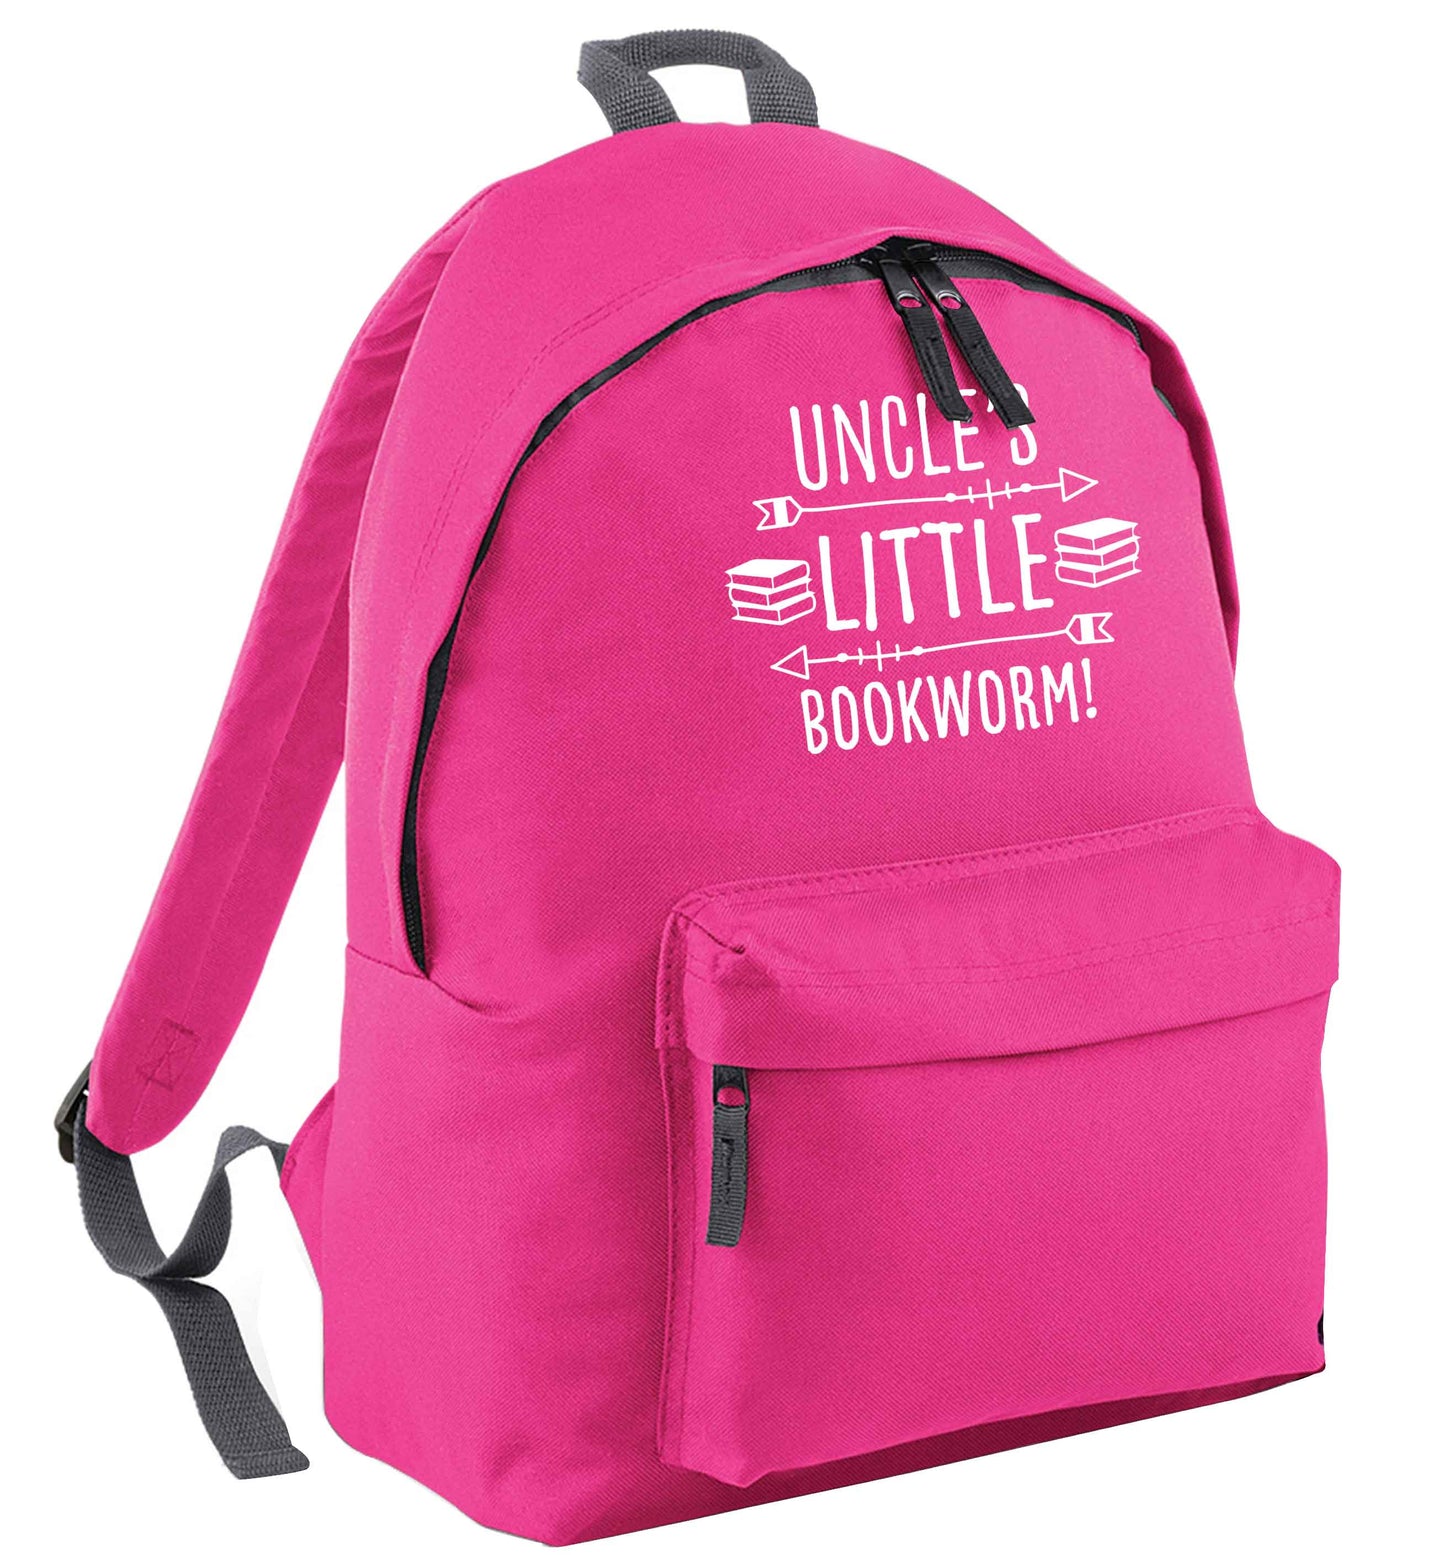 Uncle's little bookworm | Children's backpack